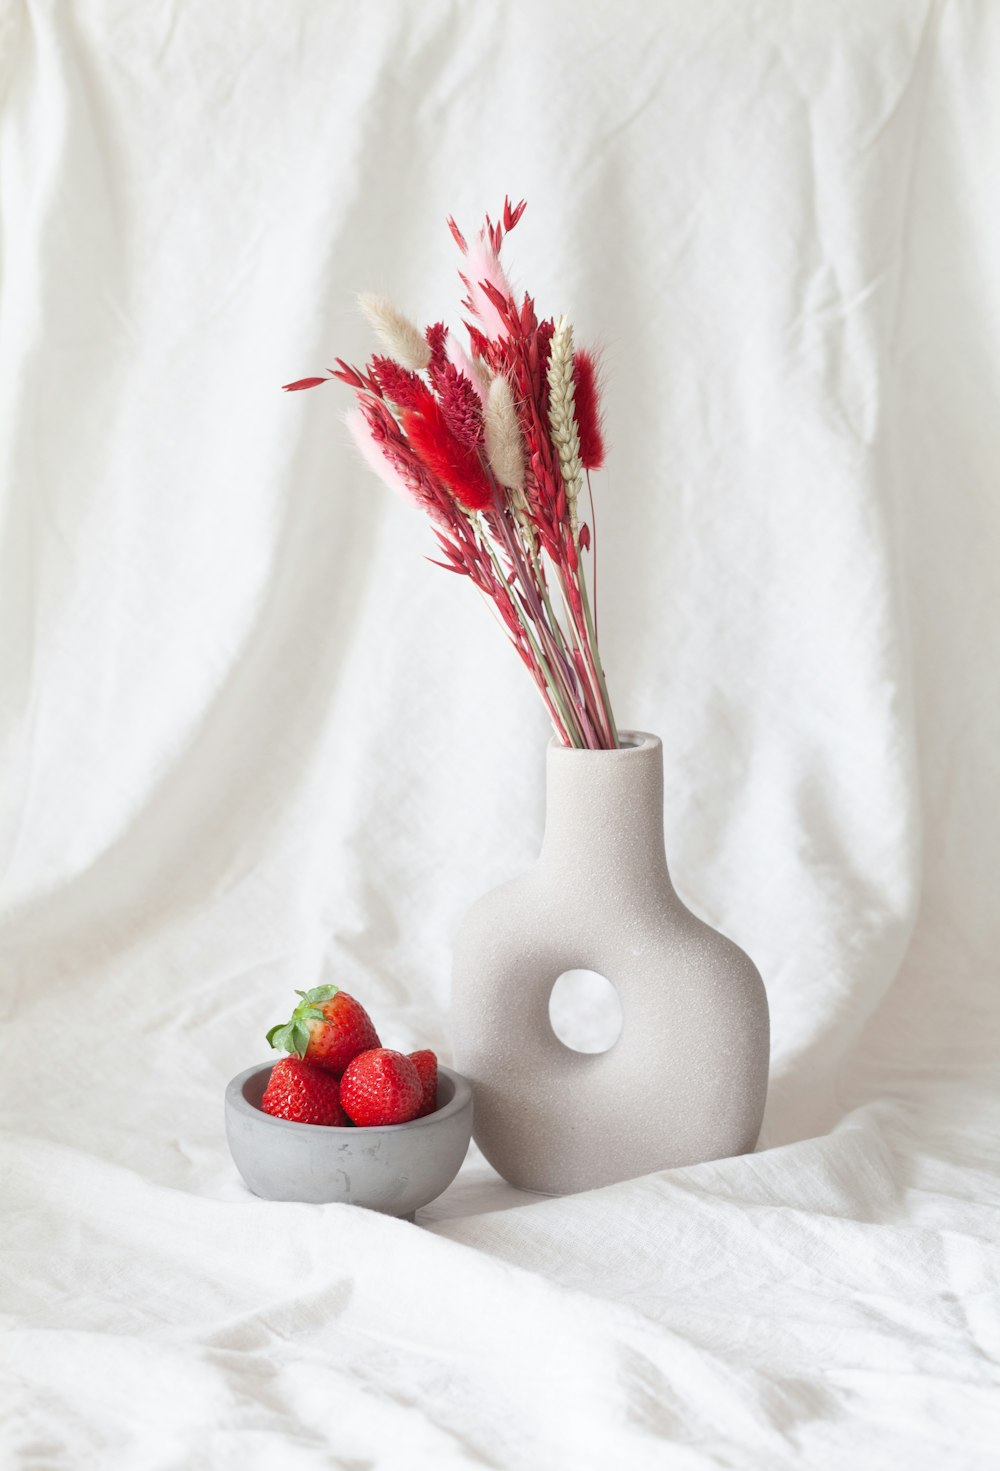 Un jarrón blanco sentado junto a un tazón de fresas